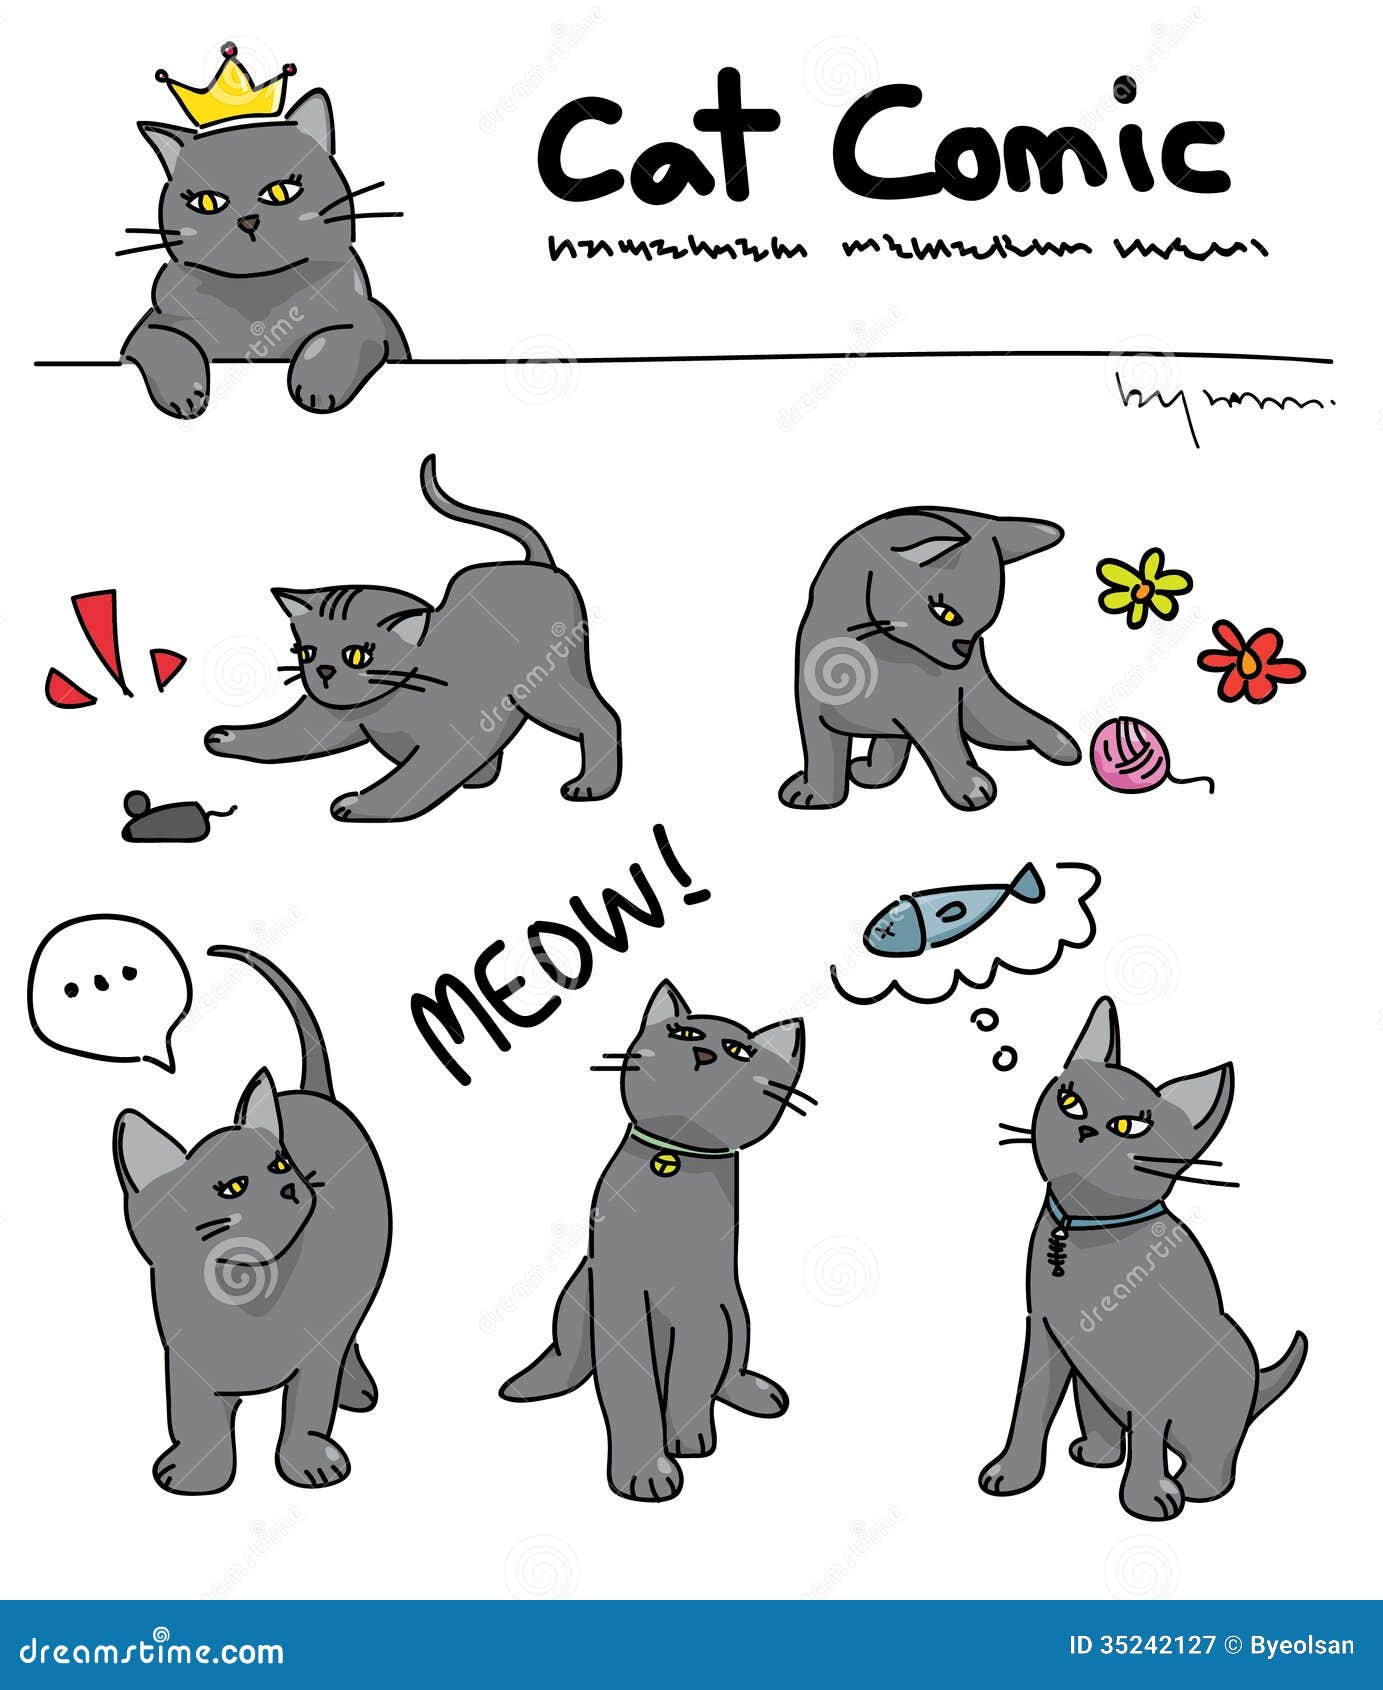 Cat Comic Stock Vector. Illustration Of Animal, Sitting - 35242127